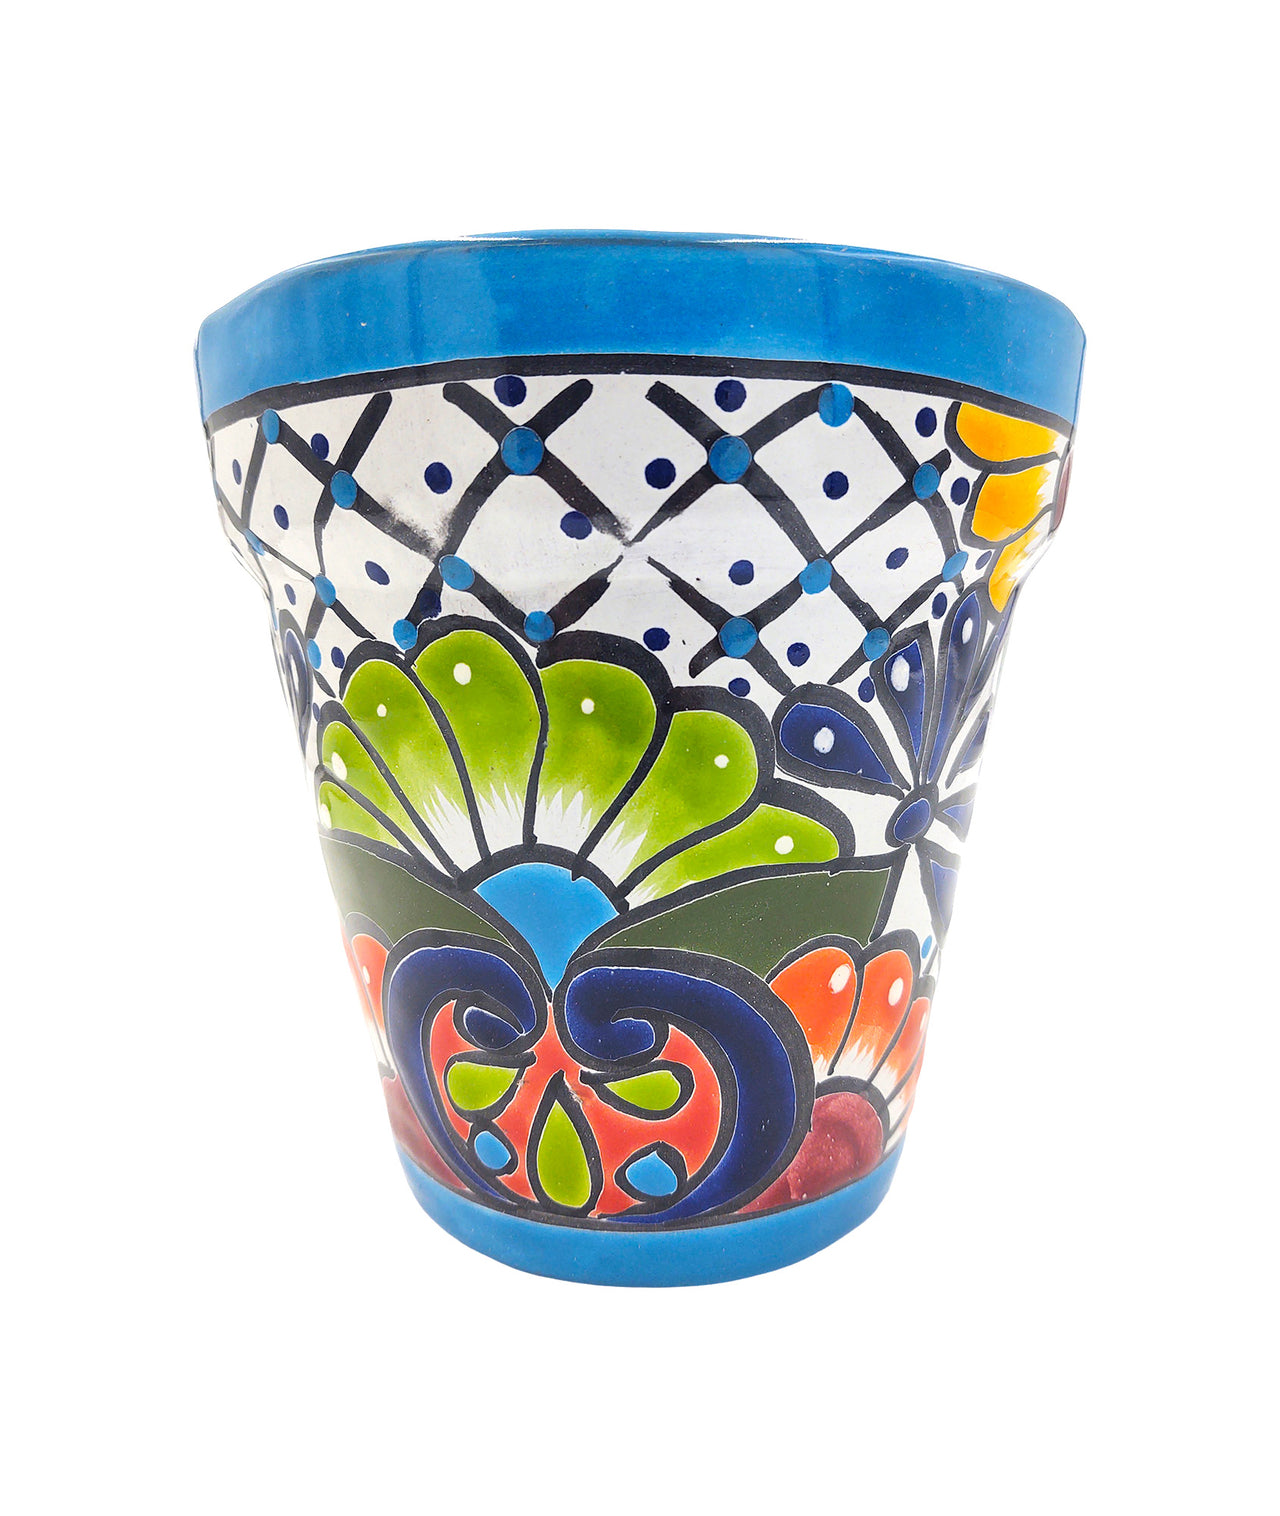 Mexican Talavera Hand Painted Planter Pot (Maceta Ranchera #20) - Traditional Ceramic Garden & Home Décor - Light Blue Trim